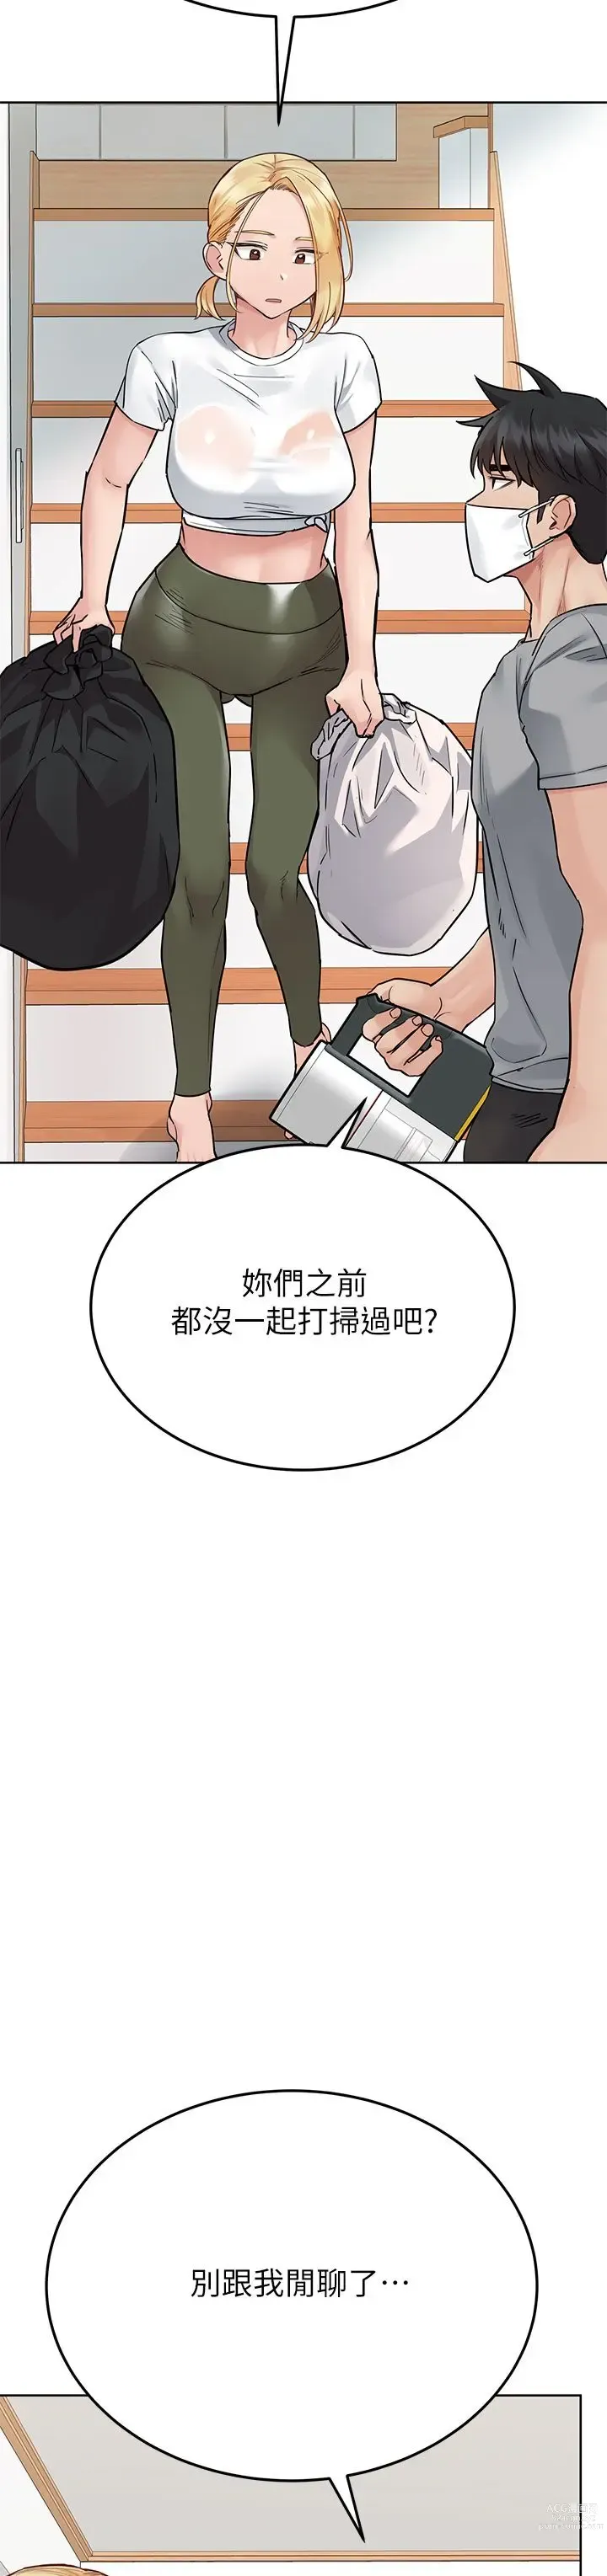 Page 26 of manga 要对妈妈保密唷! / Don‘t tell Mom! 71-100 (三）